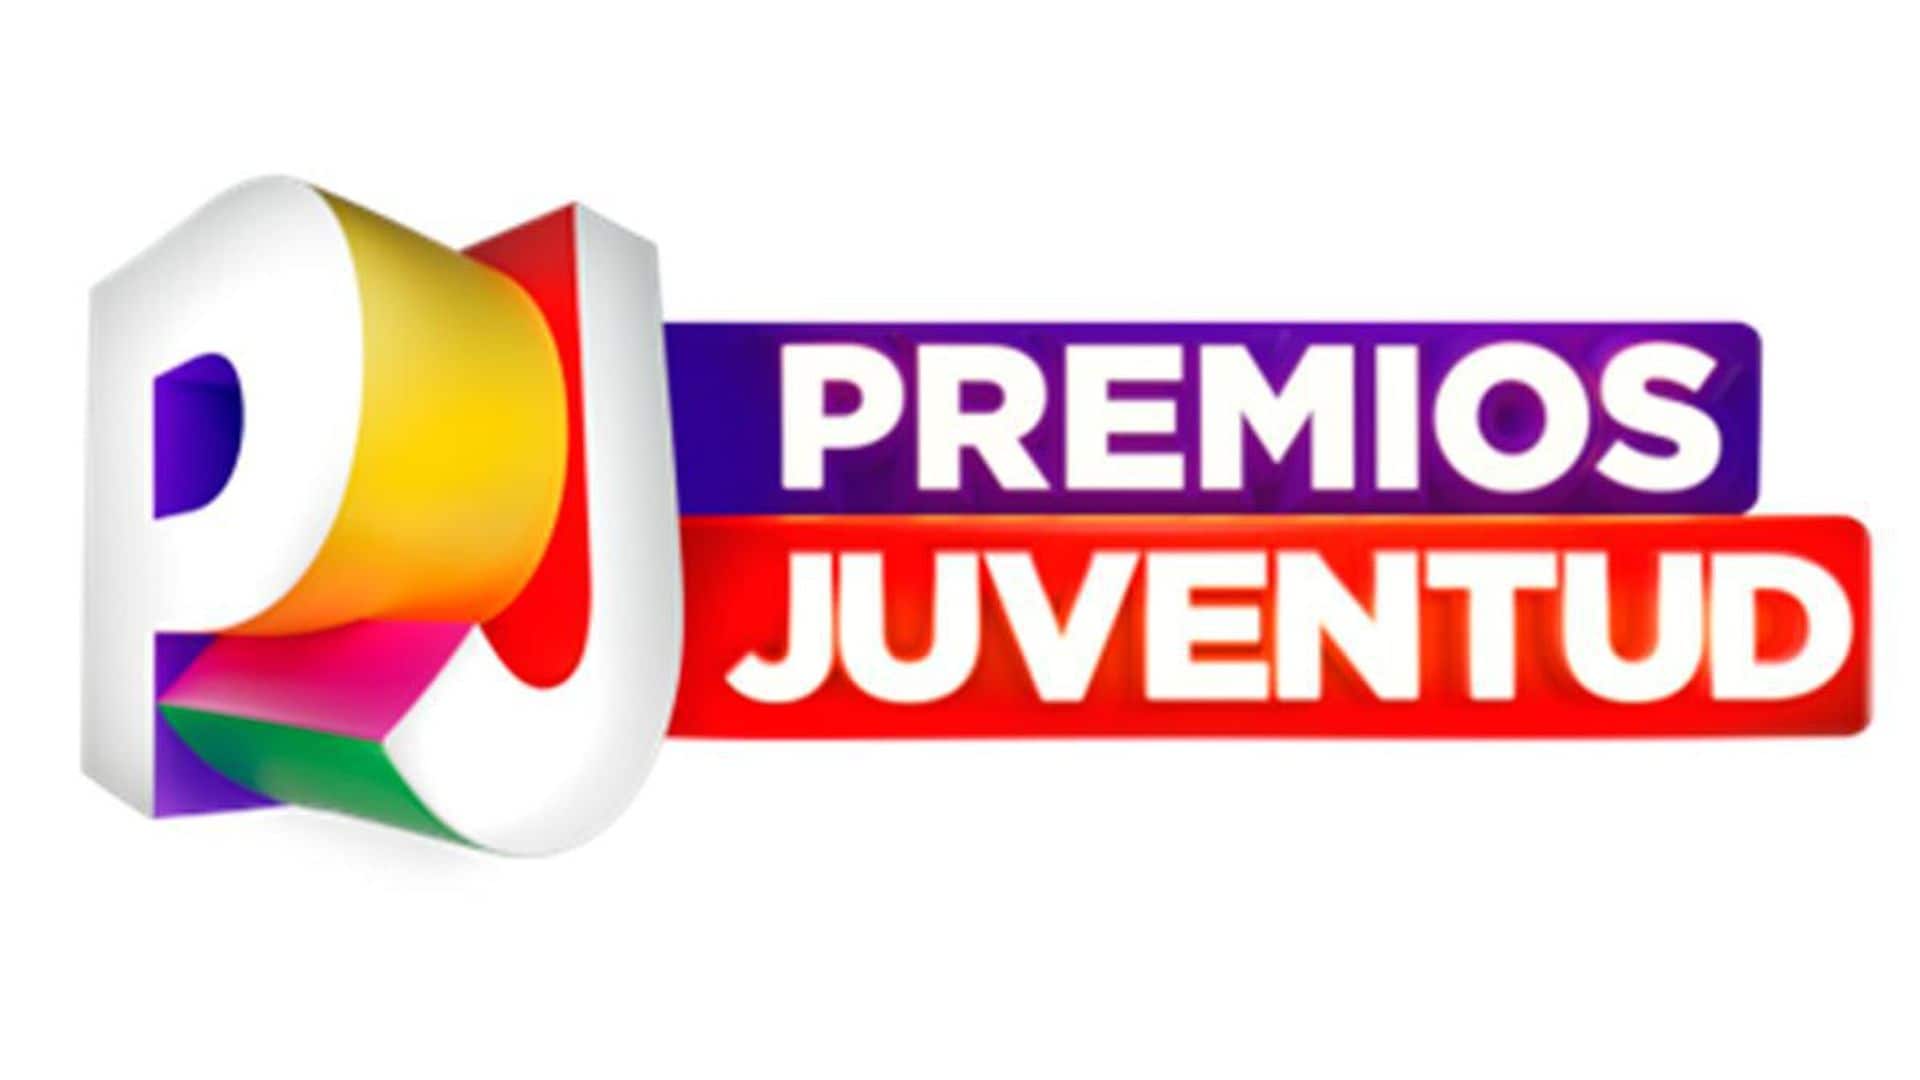 2022 Premios Juventud: Complete list of nominees